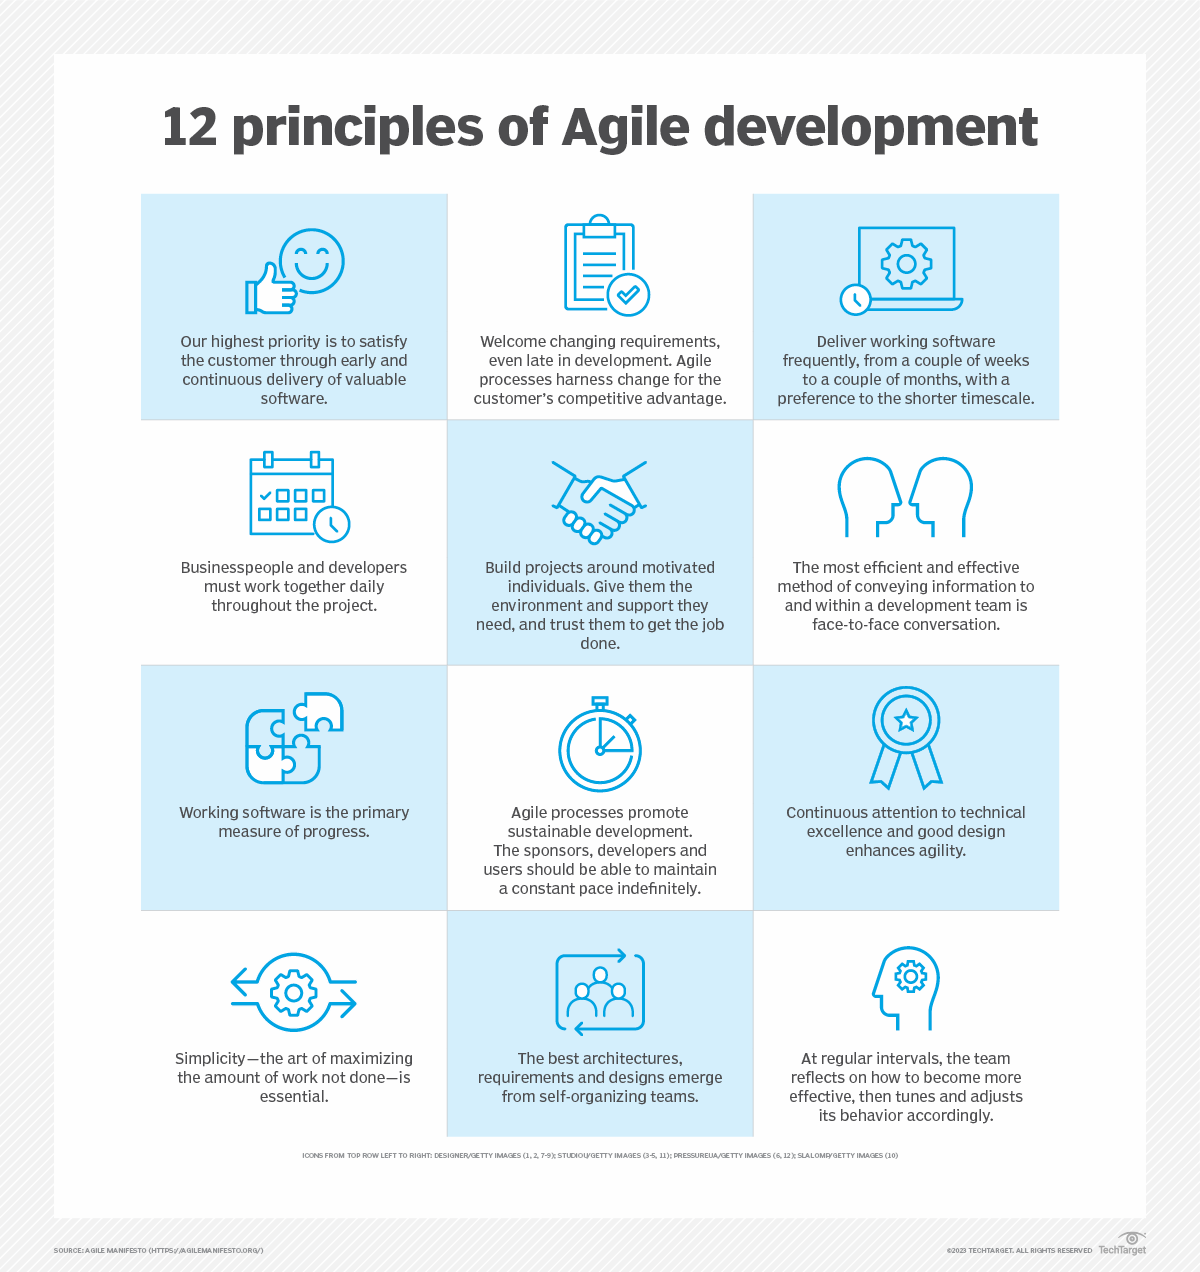 https://www.techtarget.com/searchcio/definition/Agile-Manifesto